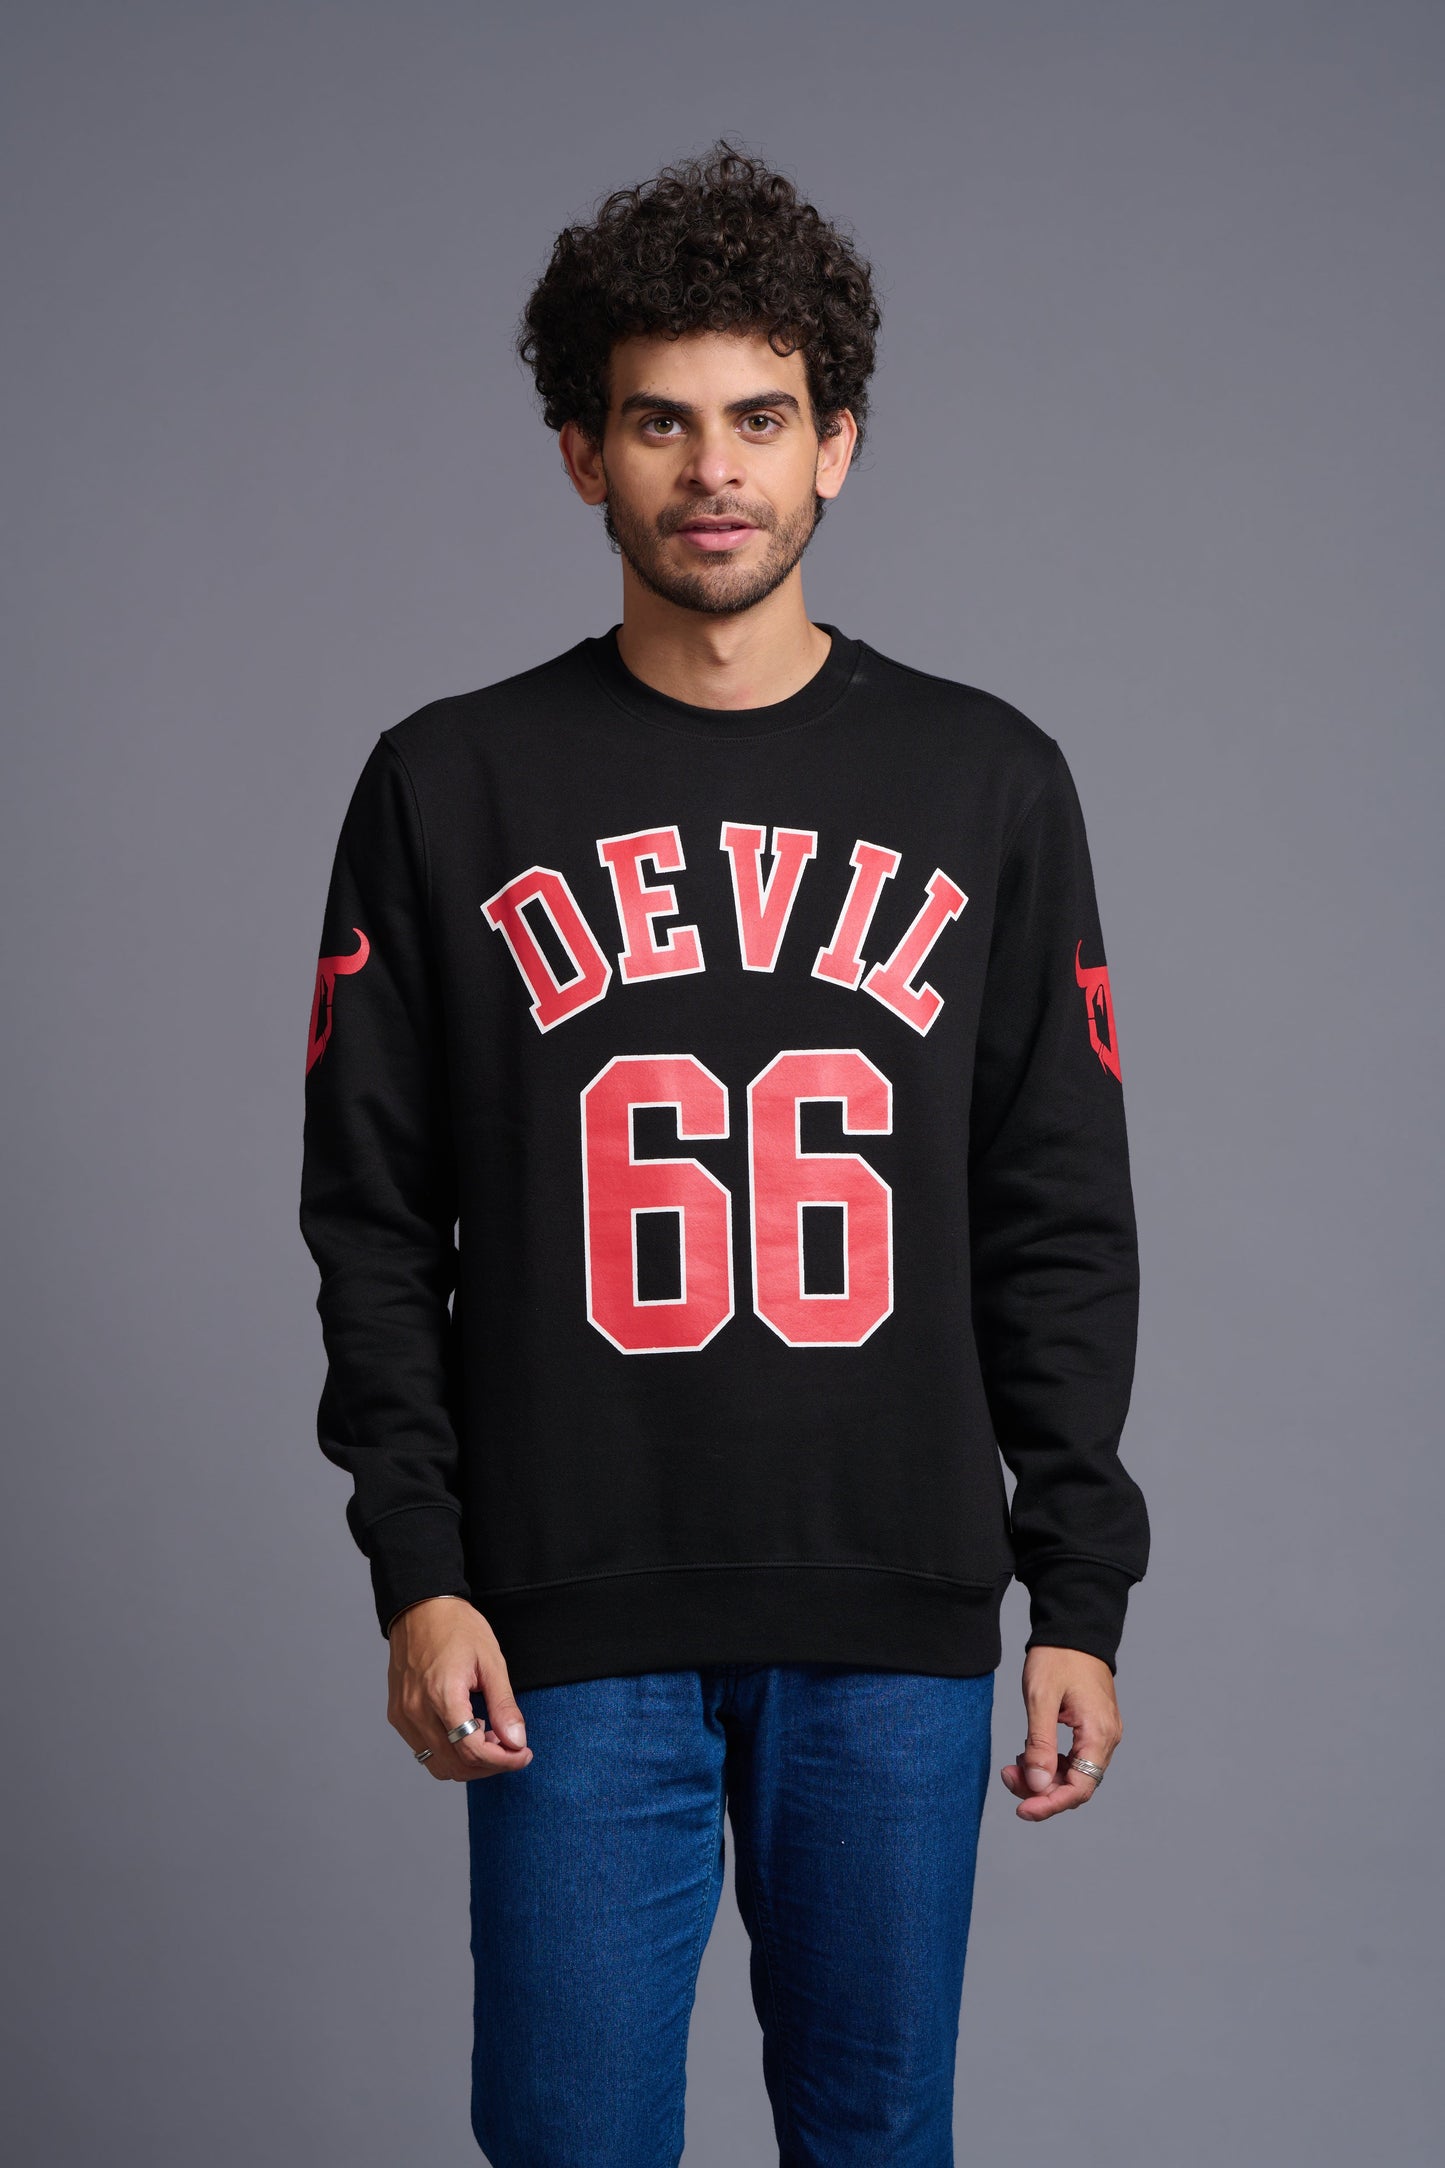 Devil66 Printed Black Sweatshirt for Men